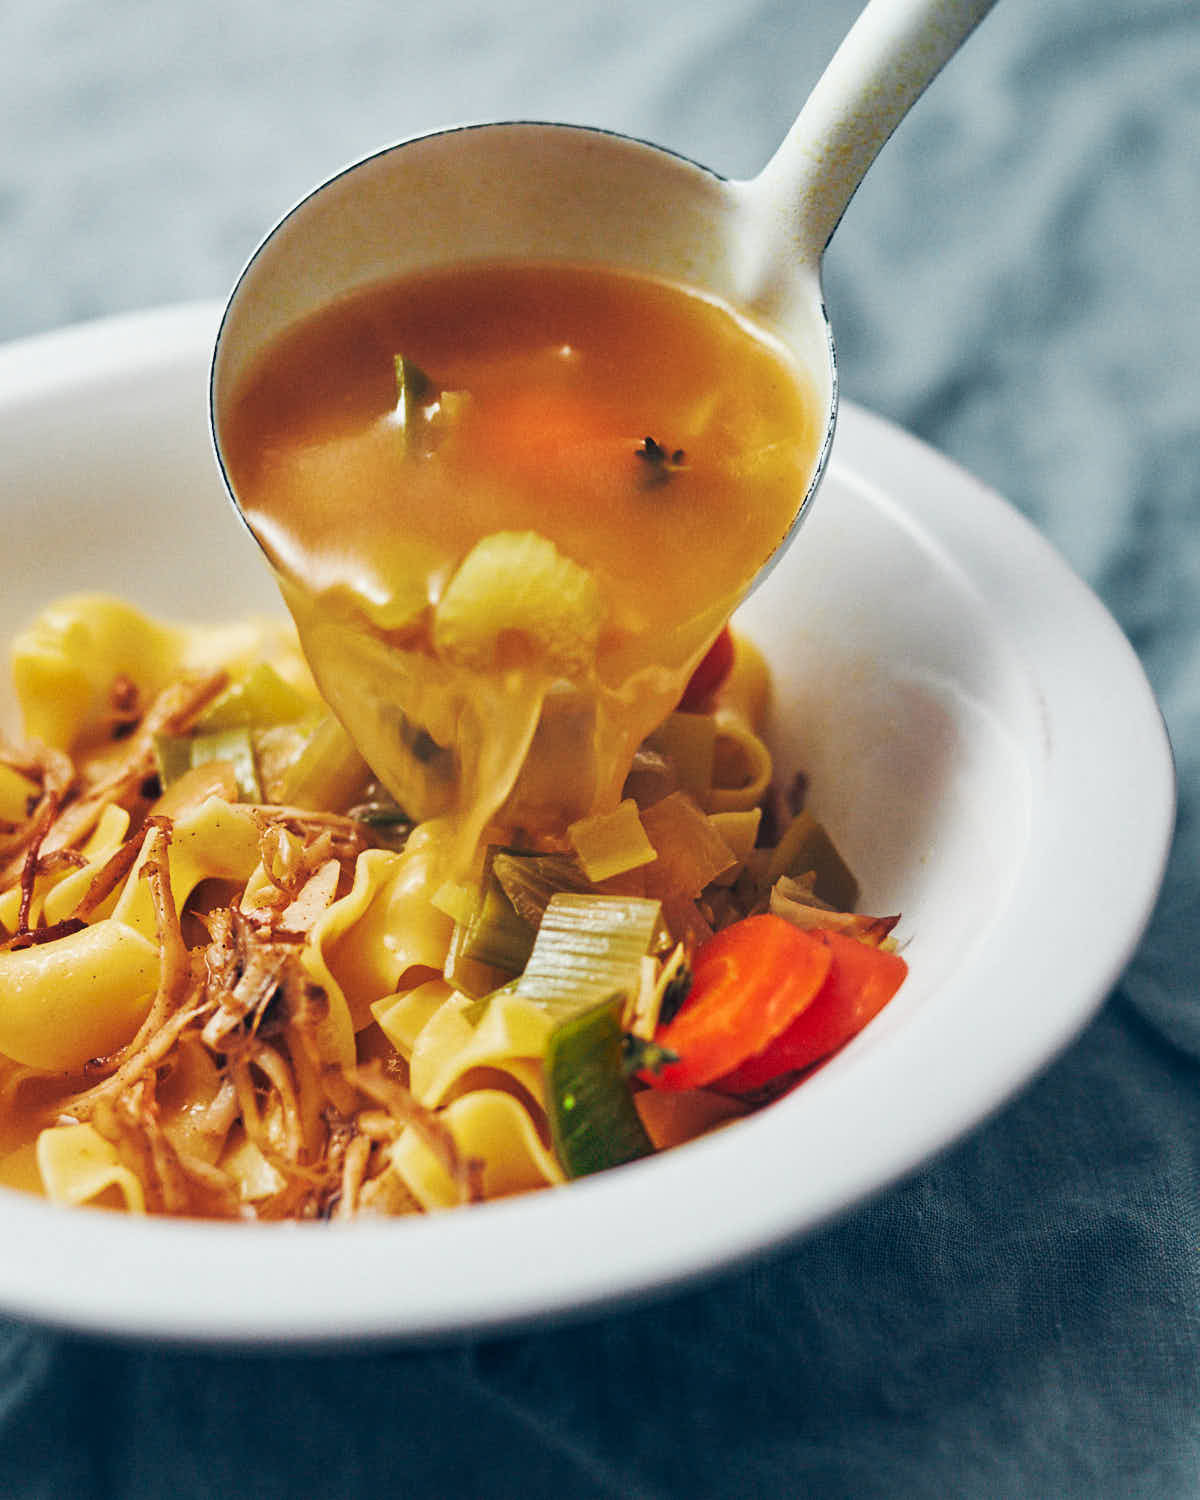 A white enamel ladle spooning vegan chicken noodle soup into a white serving bowl.